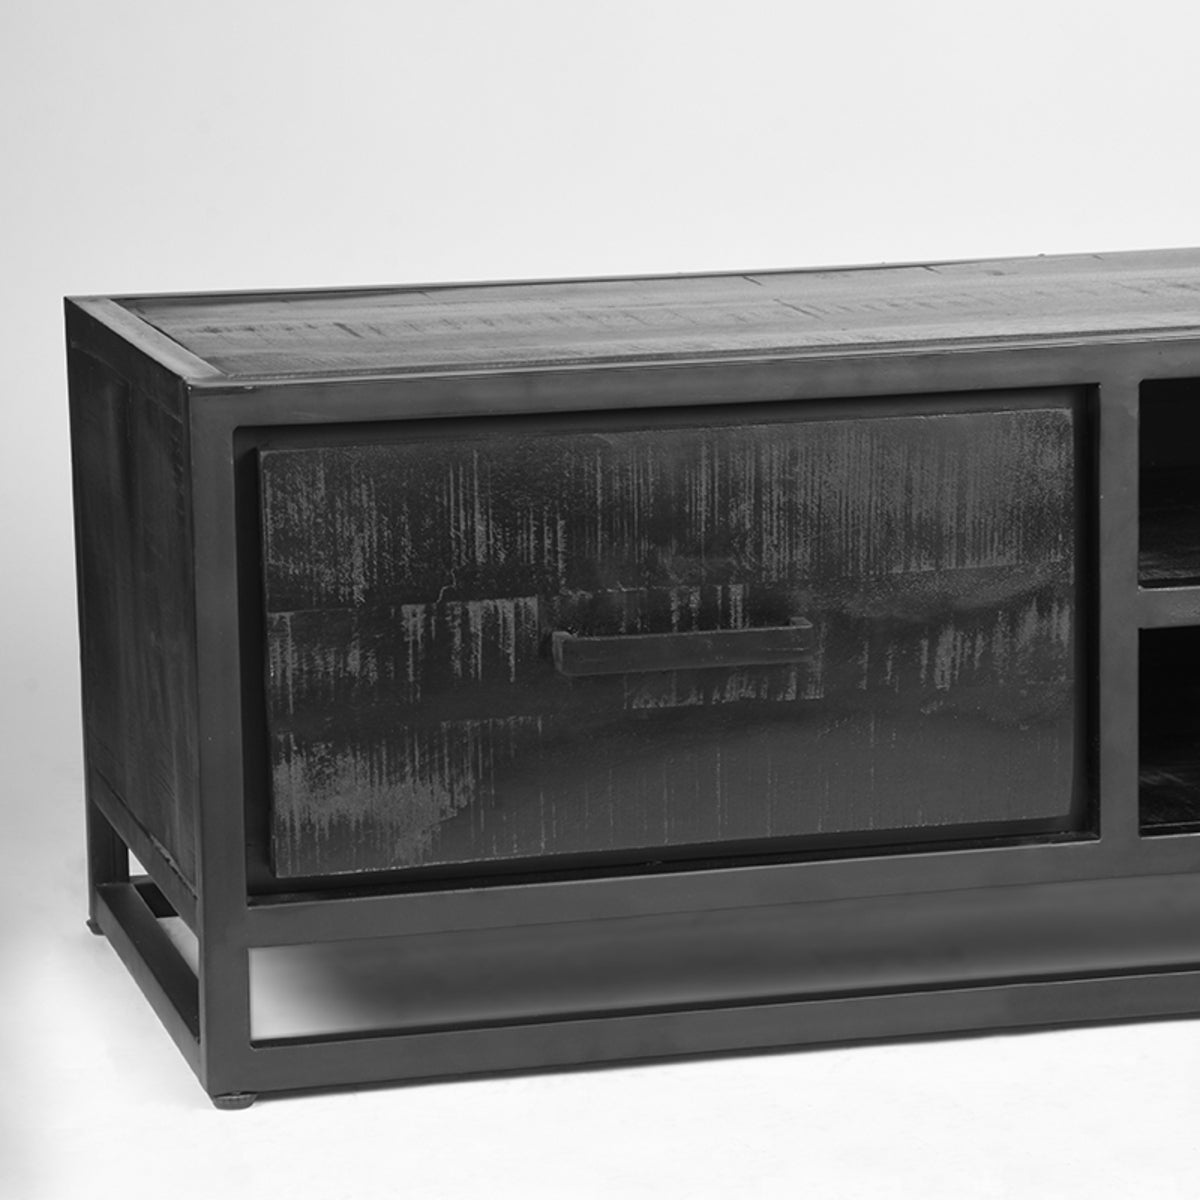 LABEL51 TV cabinet Chile - Black - Mango wood - 160 cm